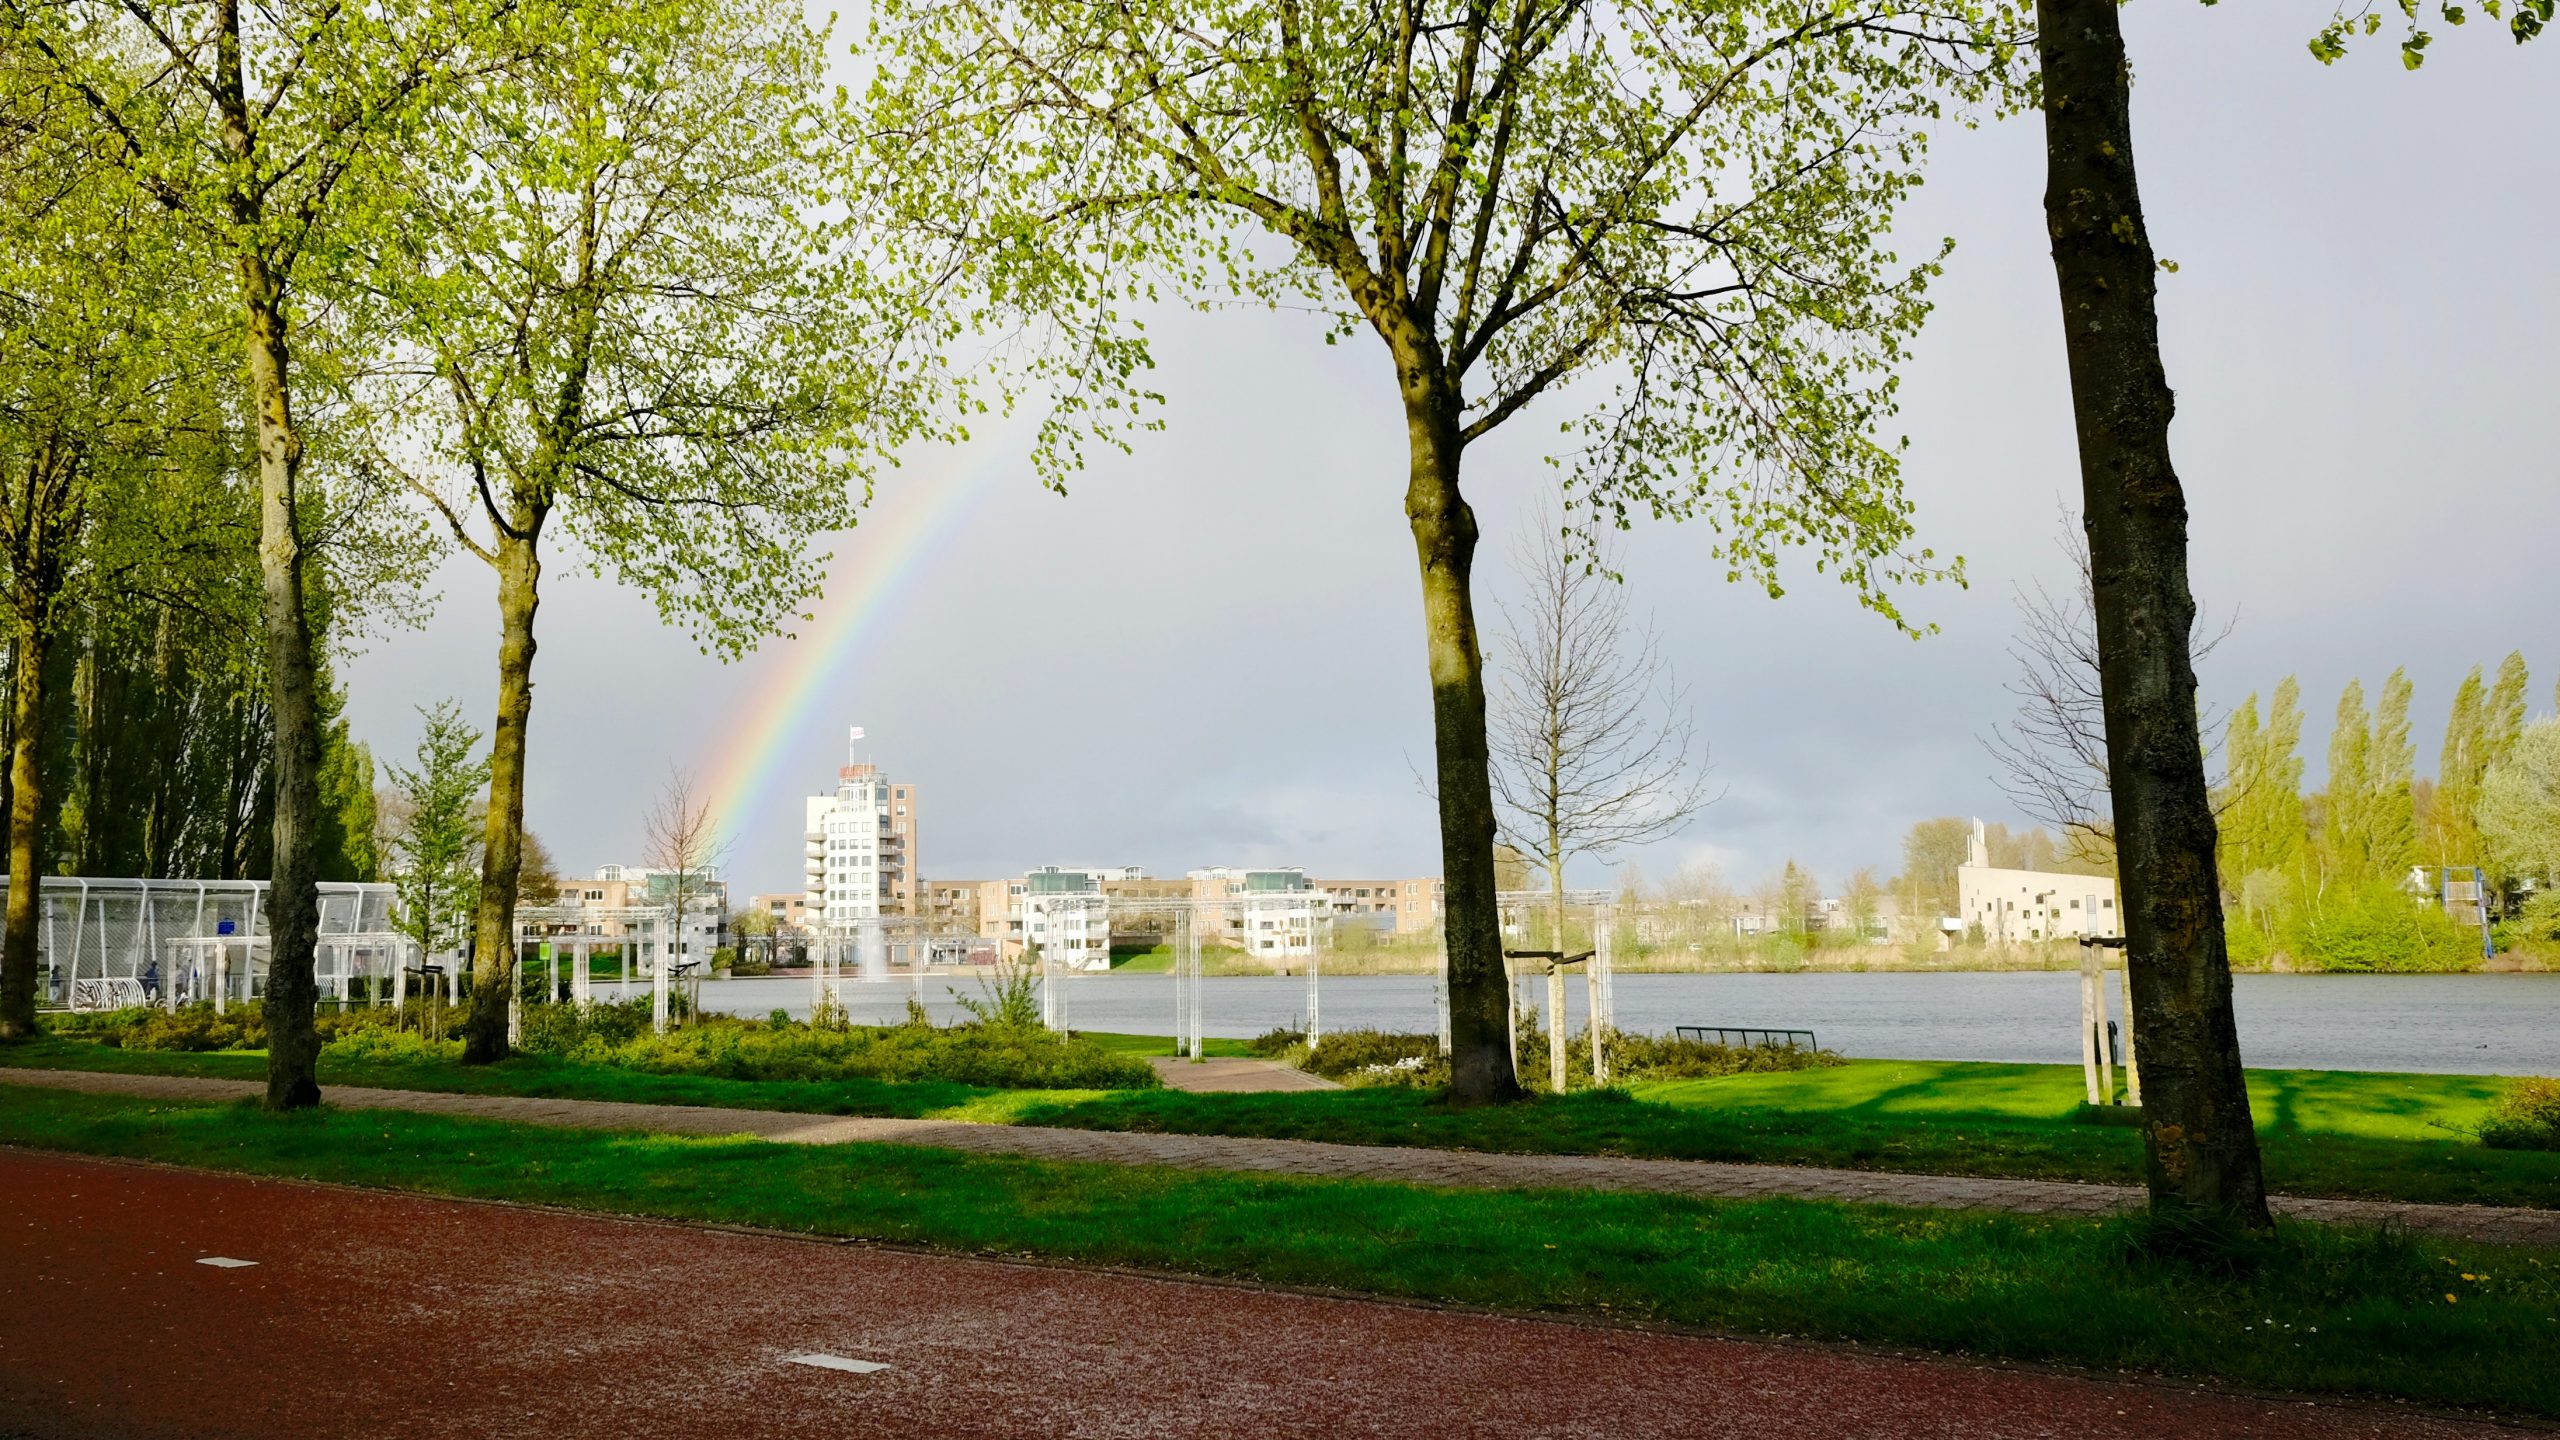 Foto di Matthias Zomer: https://www.pexels.com/it-it/foto/arcobaleno-sugli-edifici-422206/